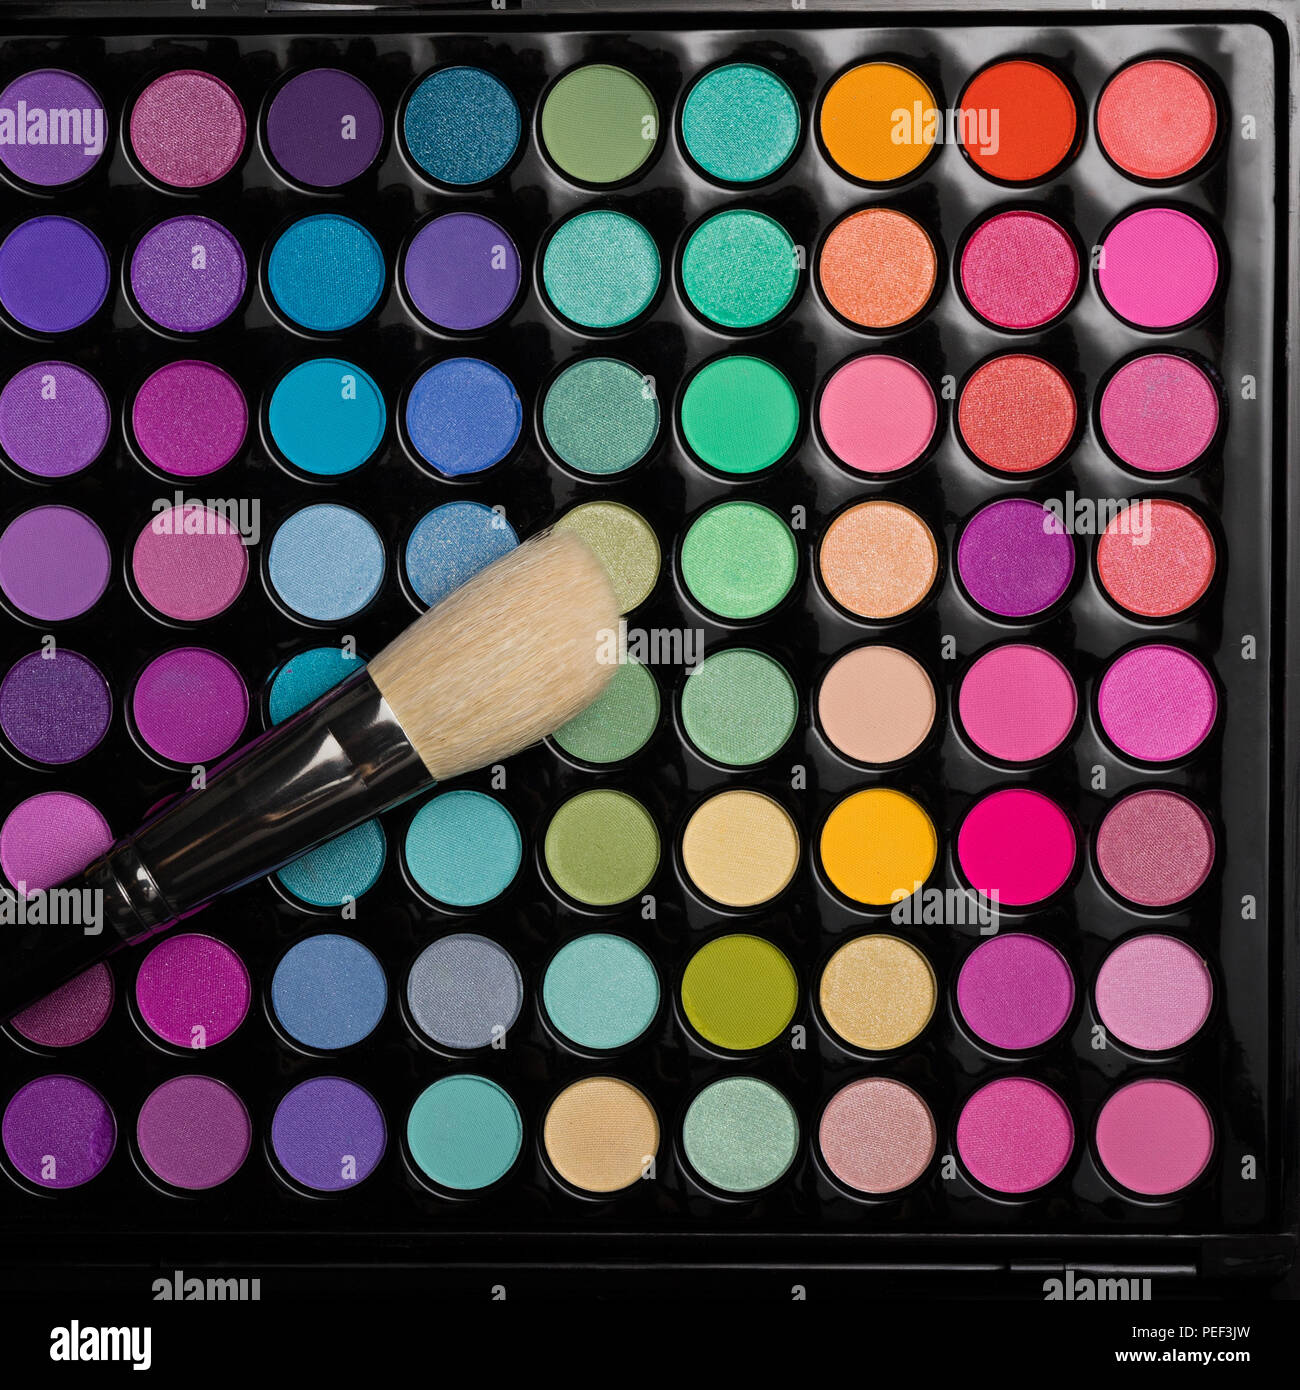 Make-up brush on colorful eyeshadow palette Stock Photo